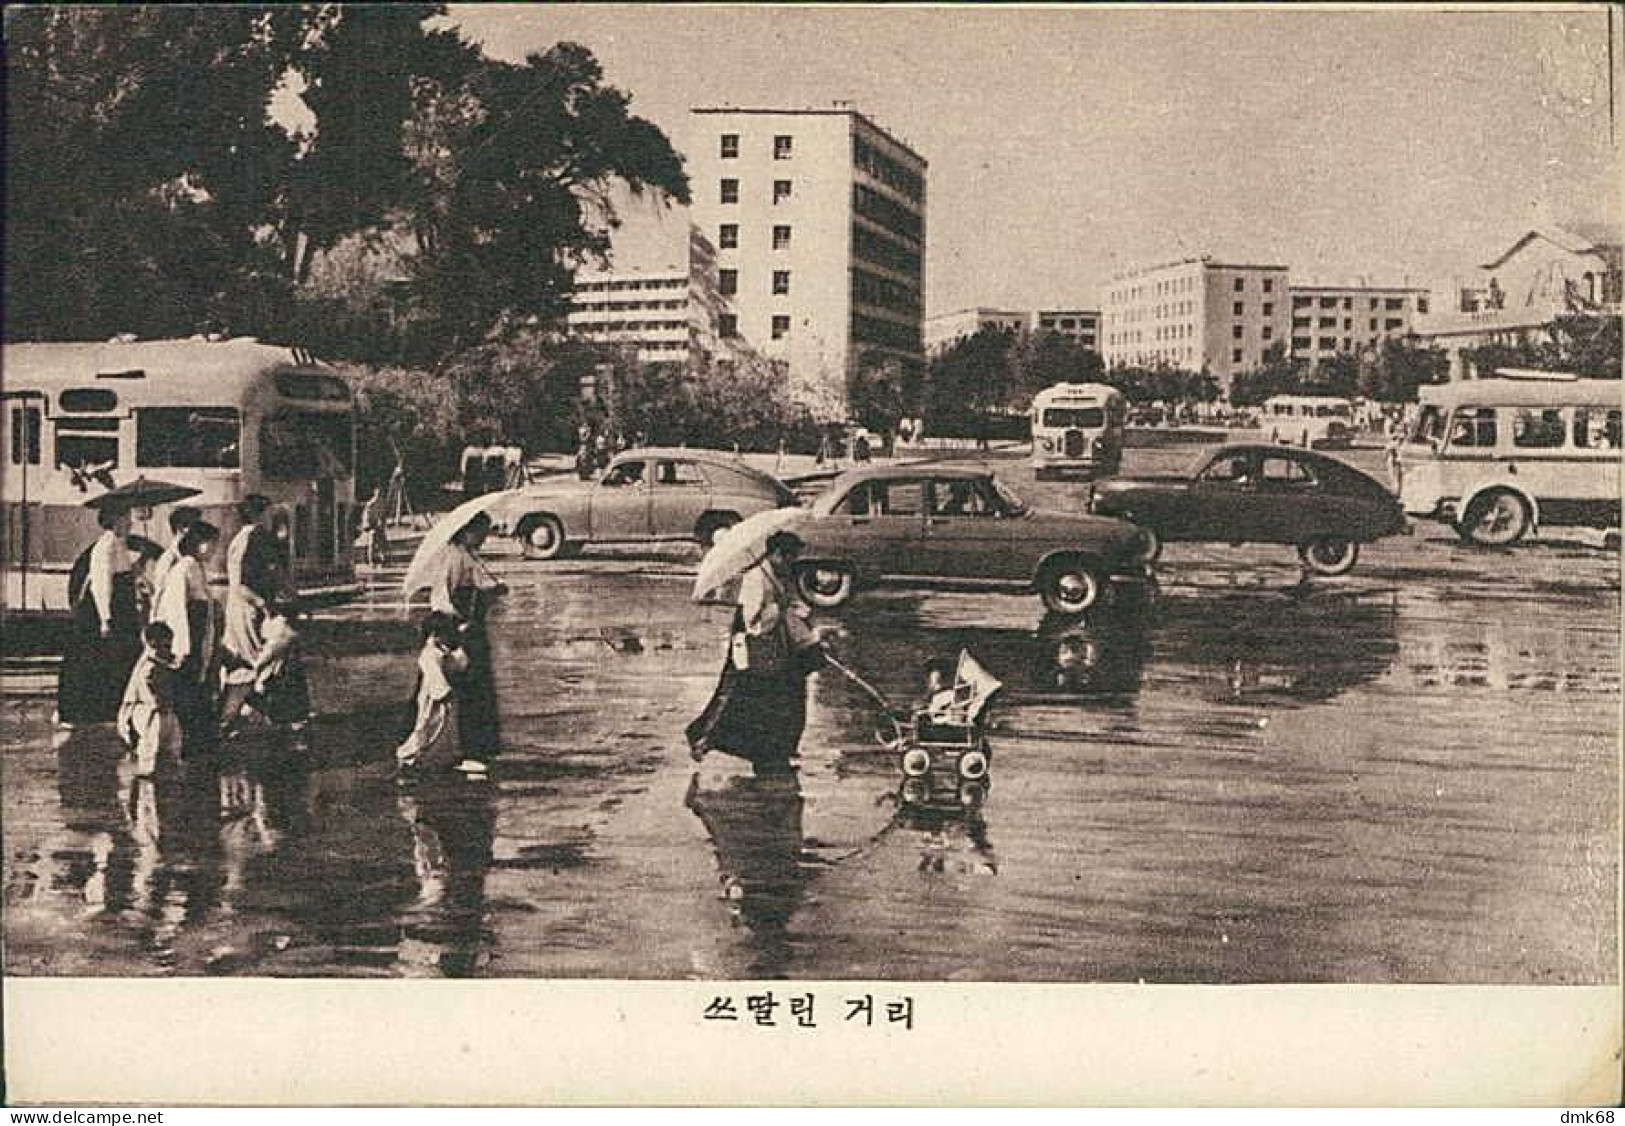 NORTH KOREA - PYONGYANG - THE STALIN STREET - 1960s (18369) - Korea, North